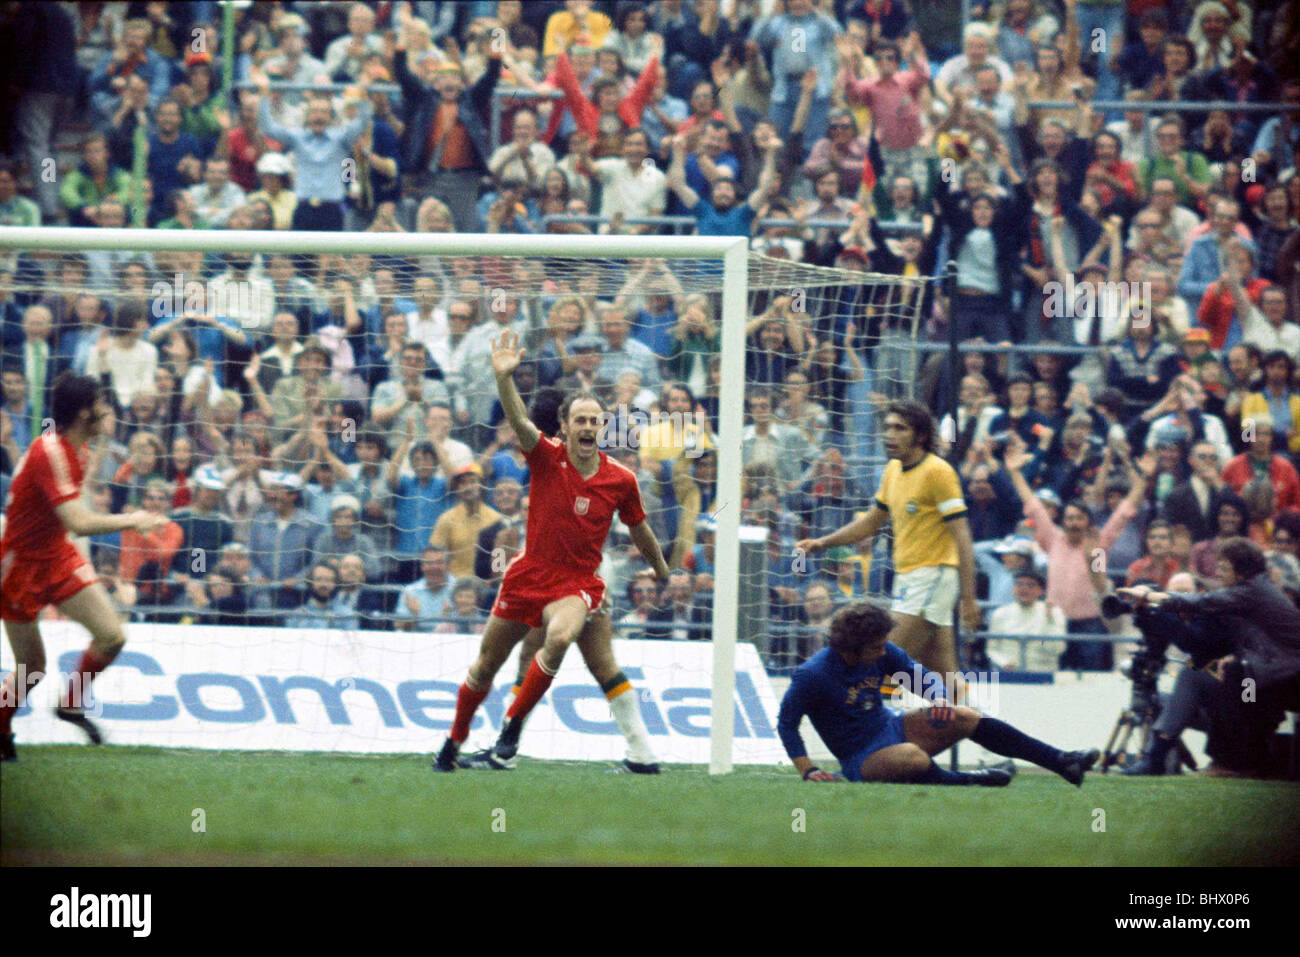 world-cup-1974-3rd-place-play-off-poland-1-brazil-0-grzegorz-lato-BHX0P6.jpg